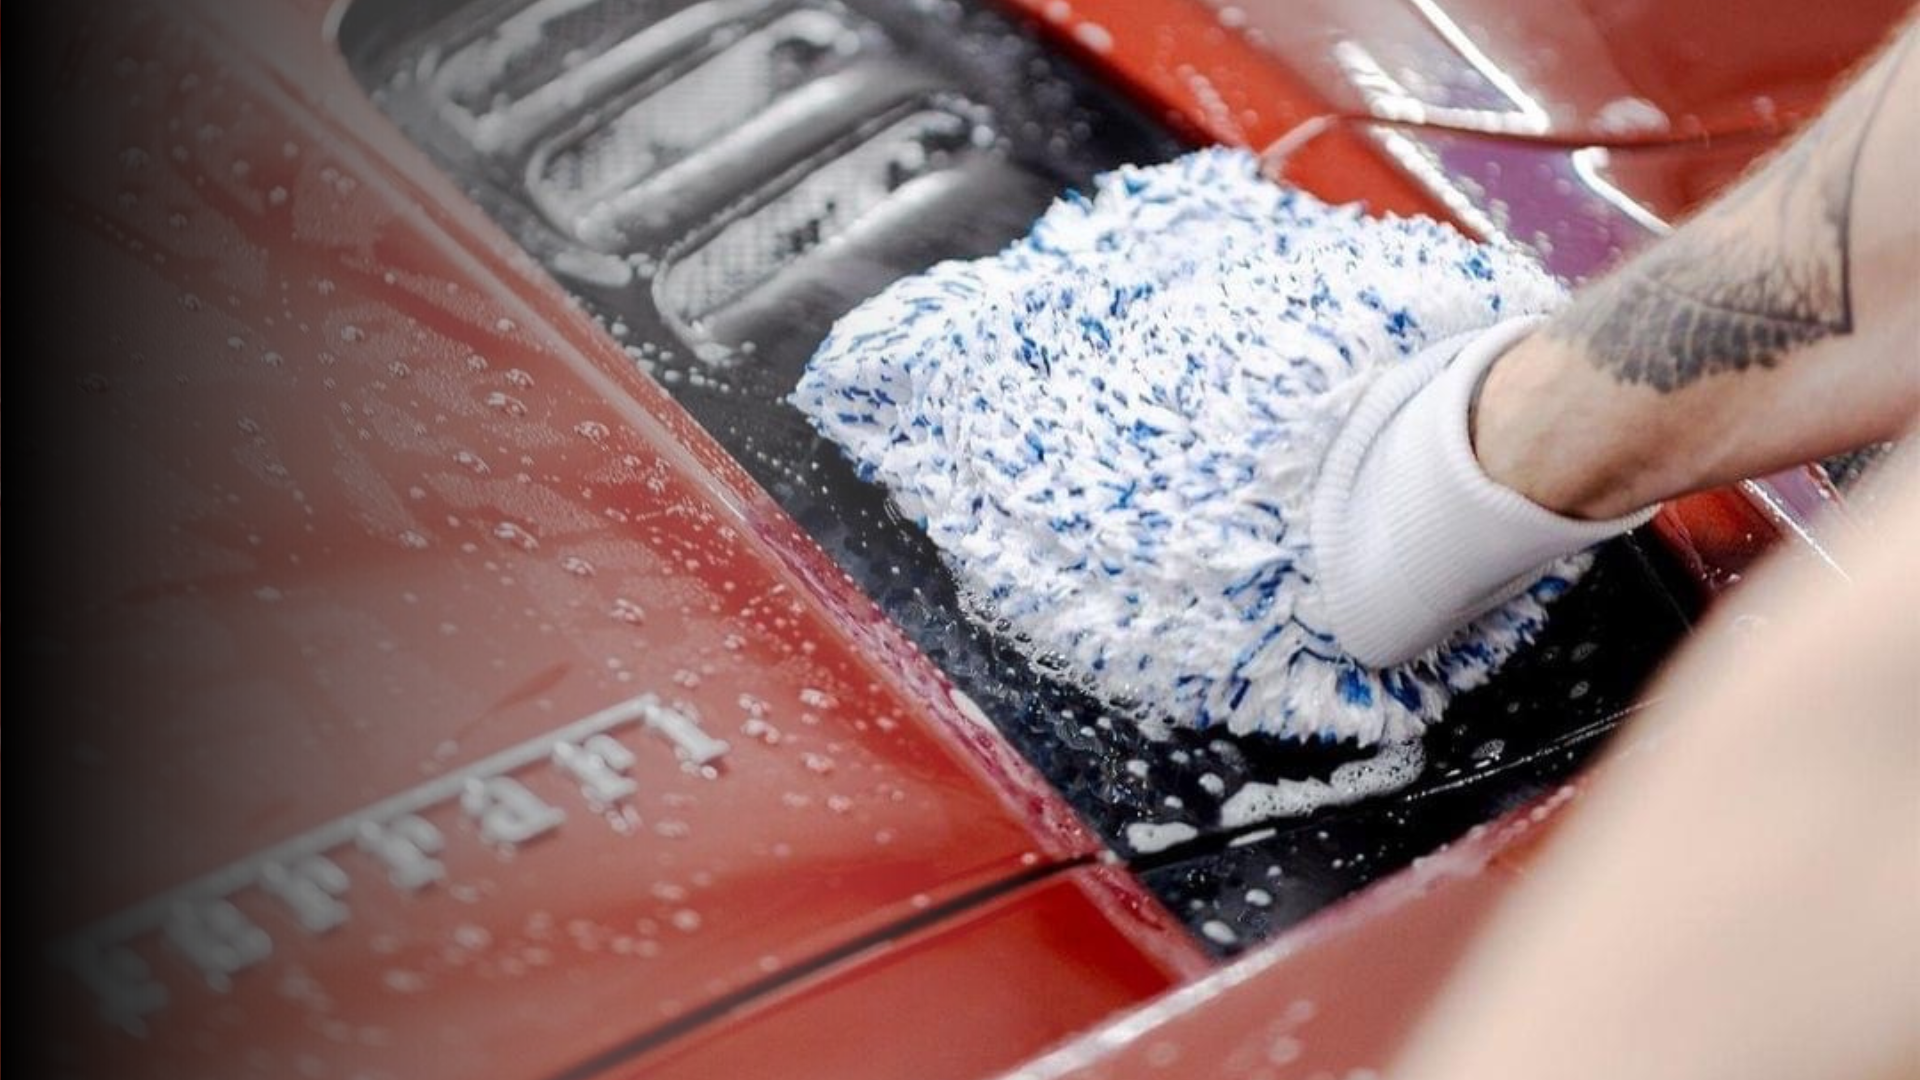 ProNano Detailing Prepare  Degreasing cleaner for vehicles - ProNano